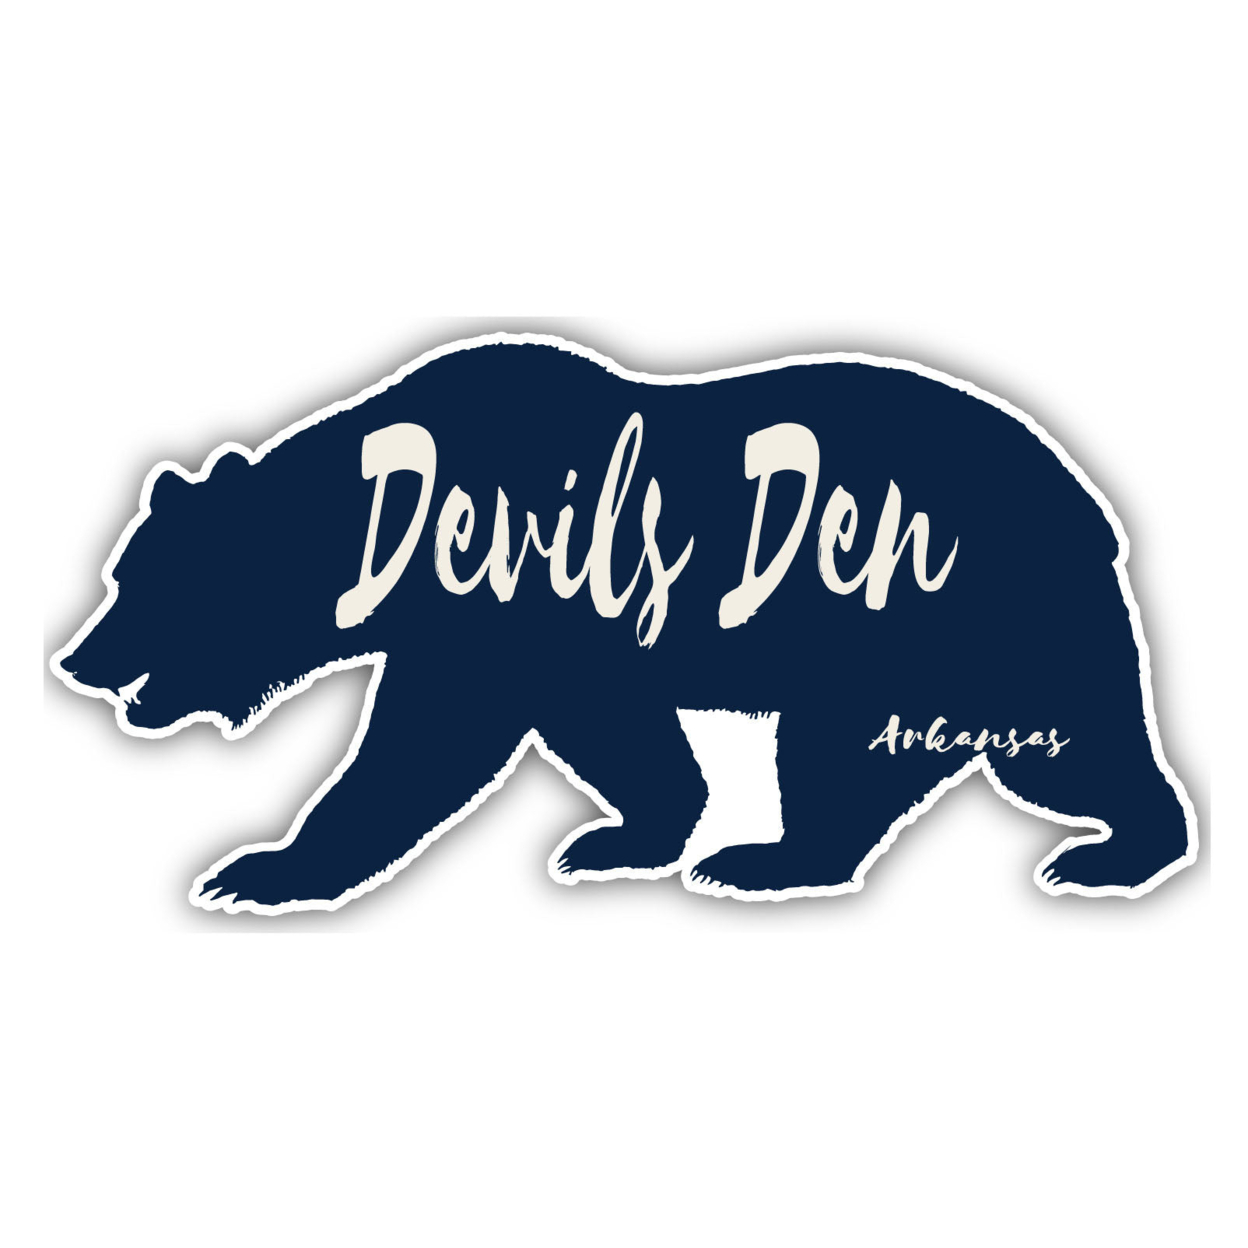 Devils Den Arkansas Souvenir Decorative Stickers (Choose Theme And Size) - 4-Pack, 4-Inch, Great Outdoors